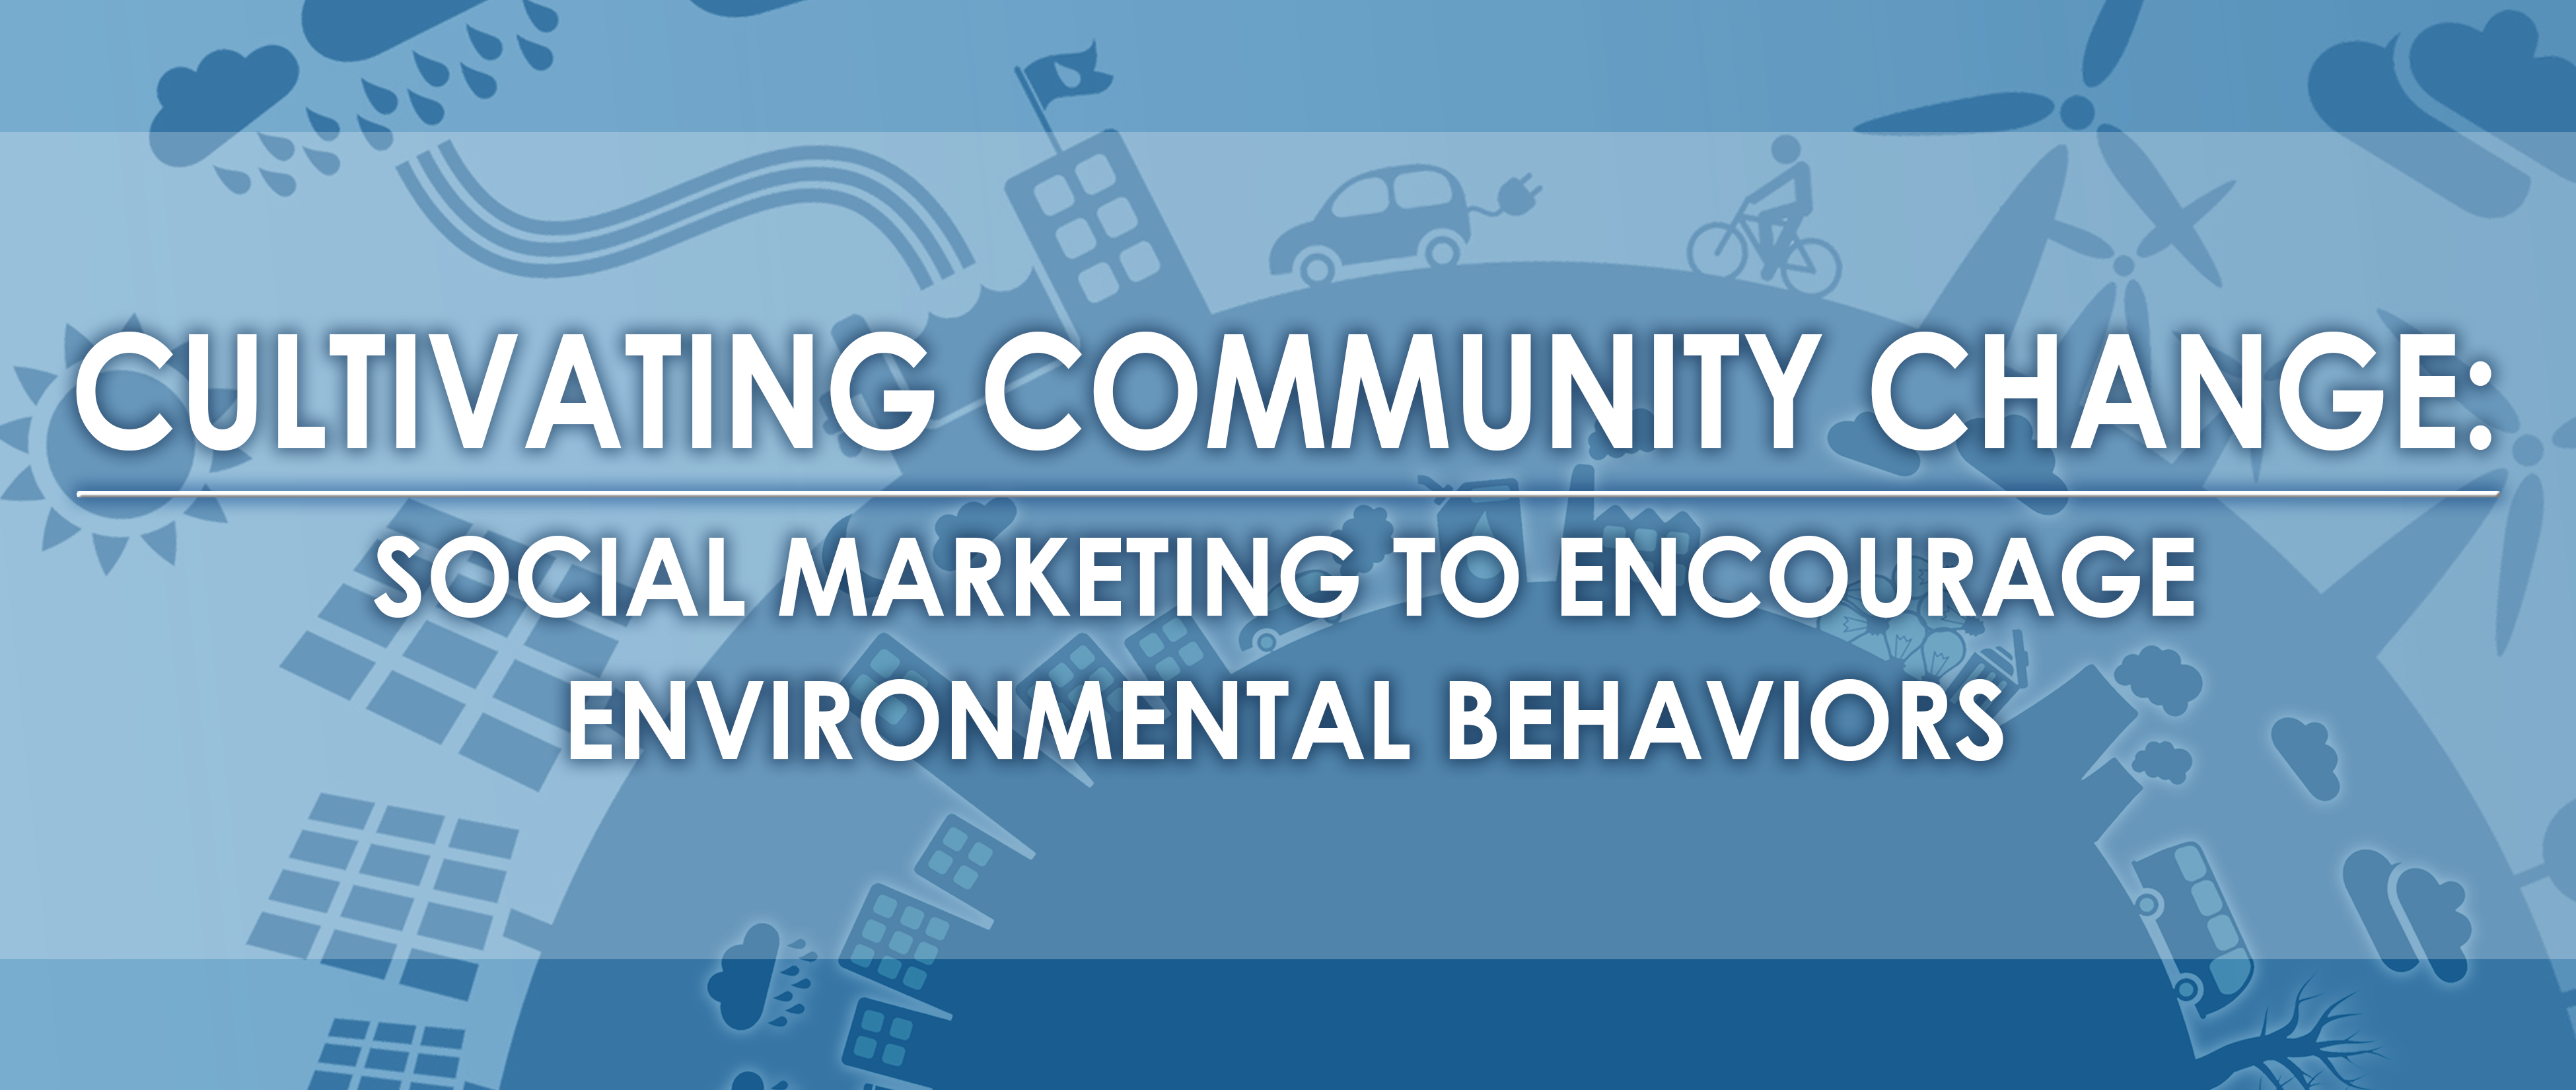 Cultivating community change: Social marketing to encourage environmental behaviors